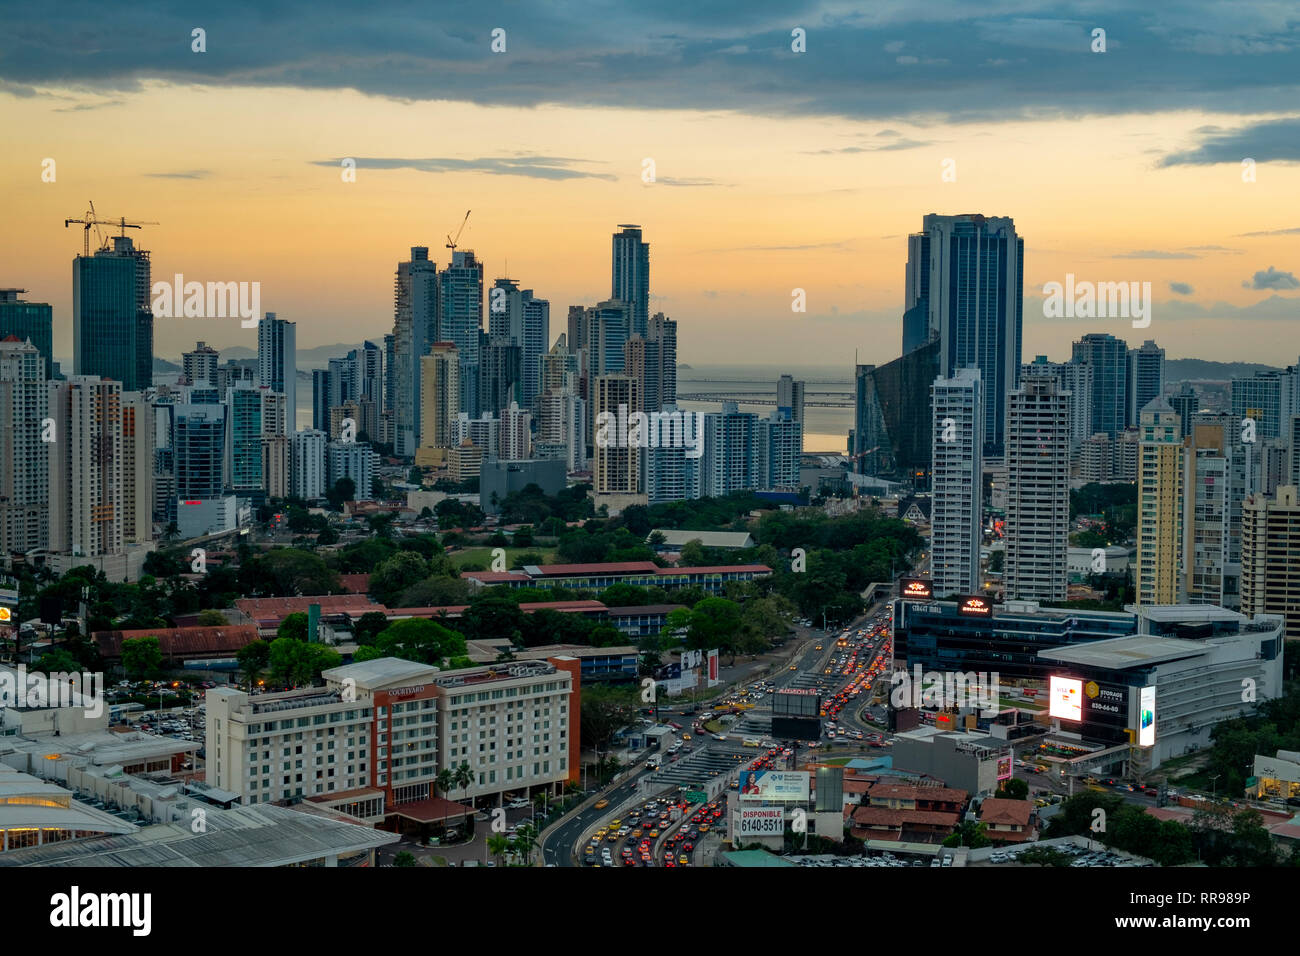 The skyline of Panama City at night, Panama City, Panama, Central America Stock Photo